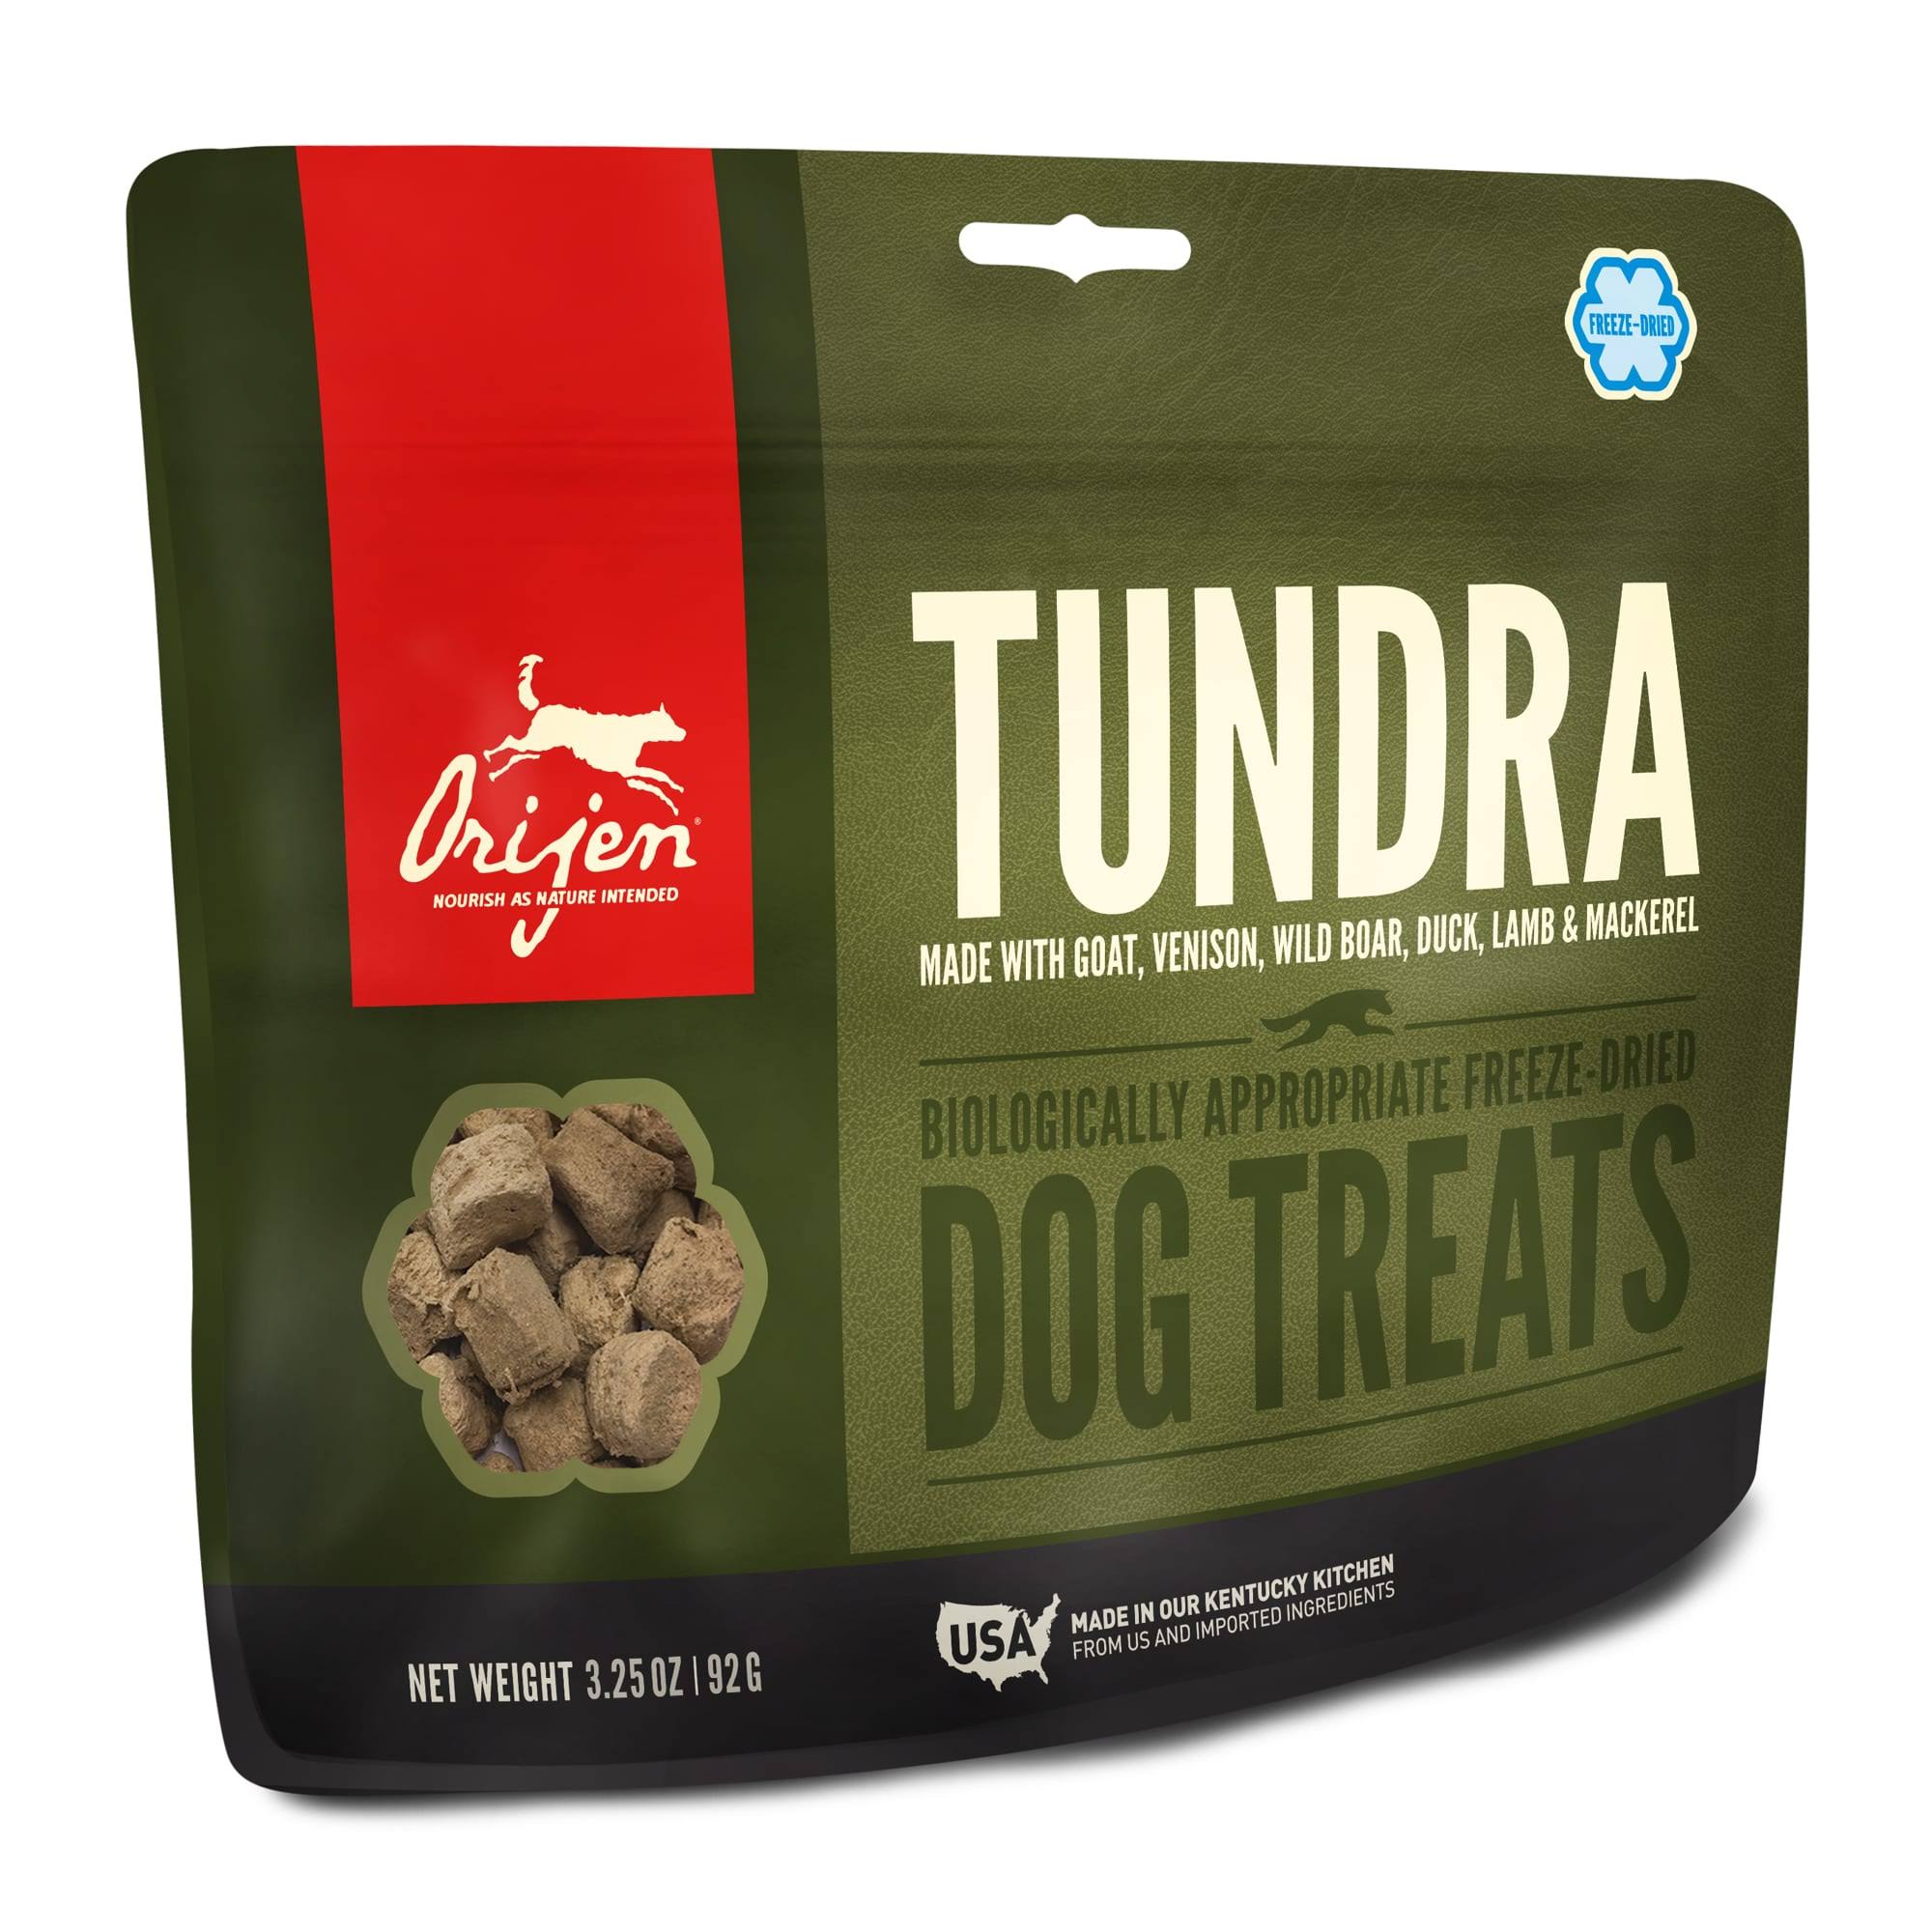 Orijen Freeze Dried Dog Treats, Tundra / 3.25 oz